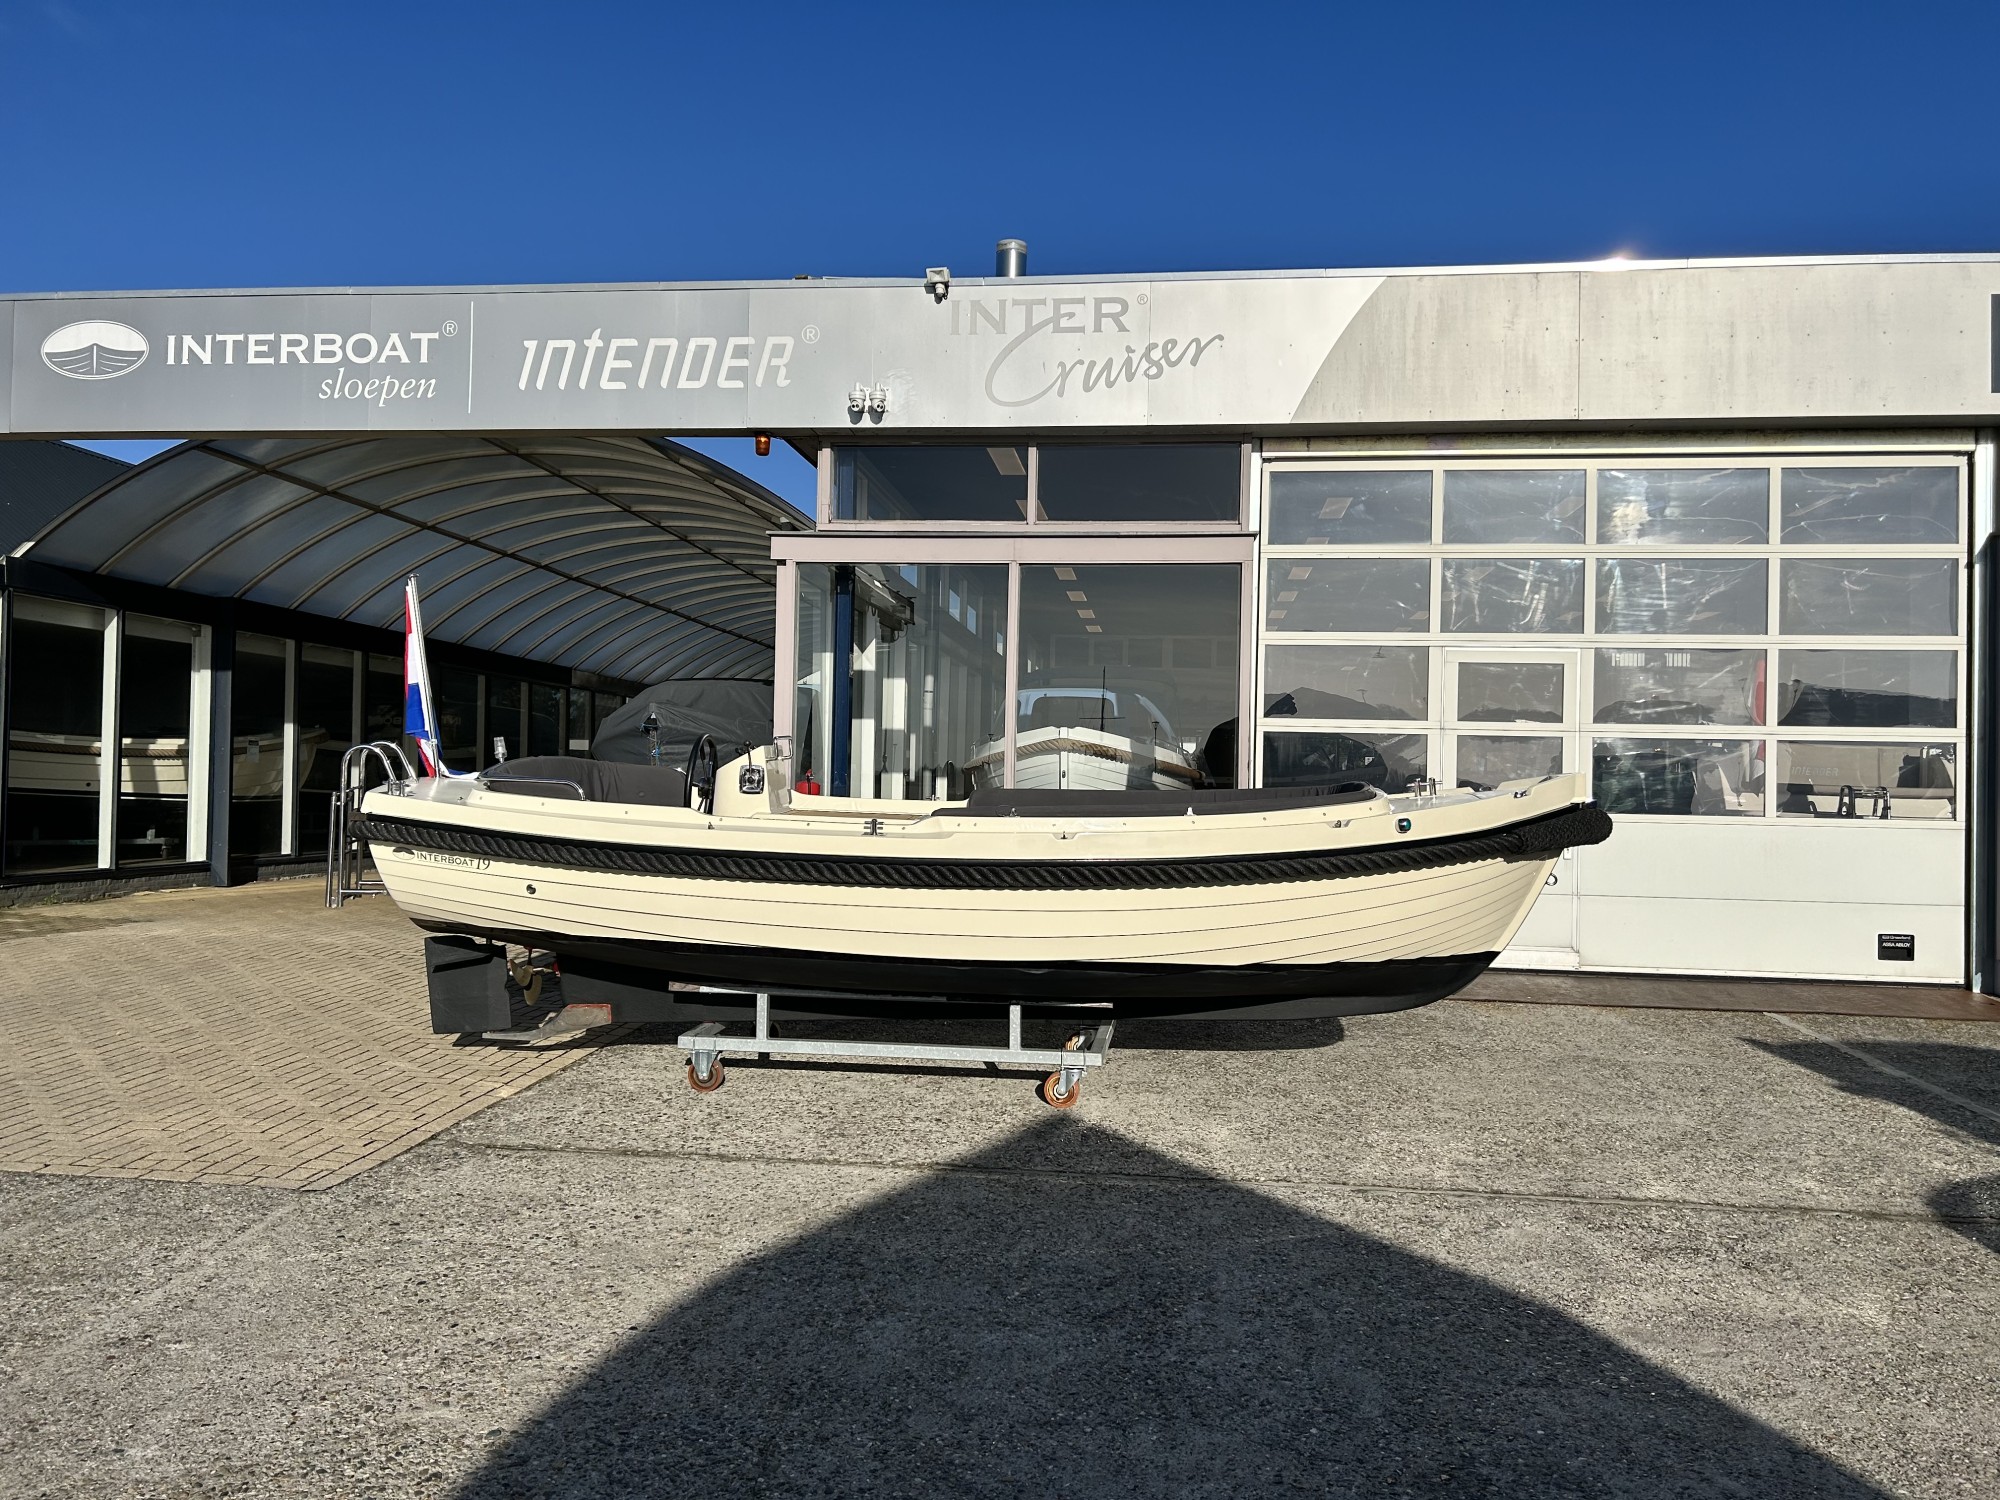 Interboat 19 2006